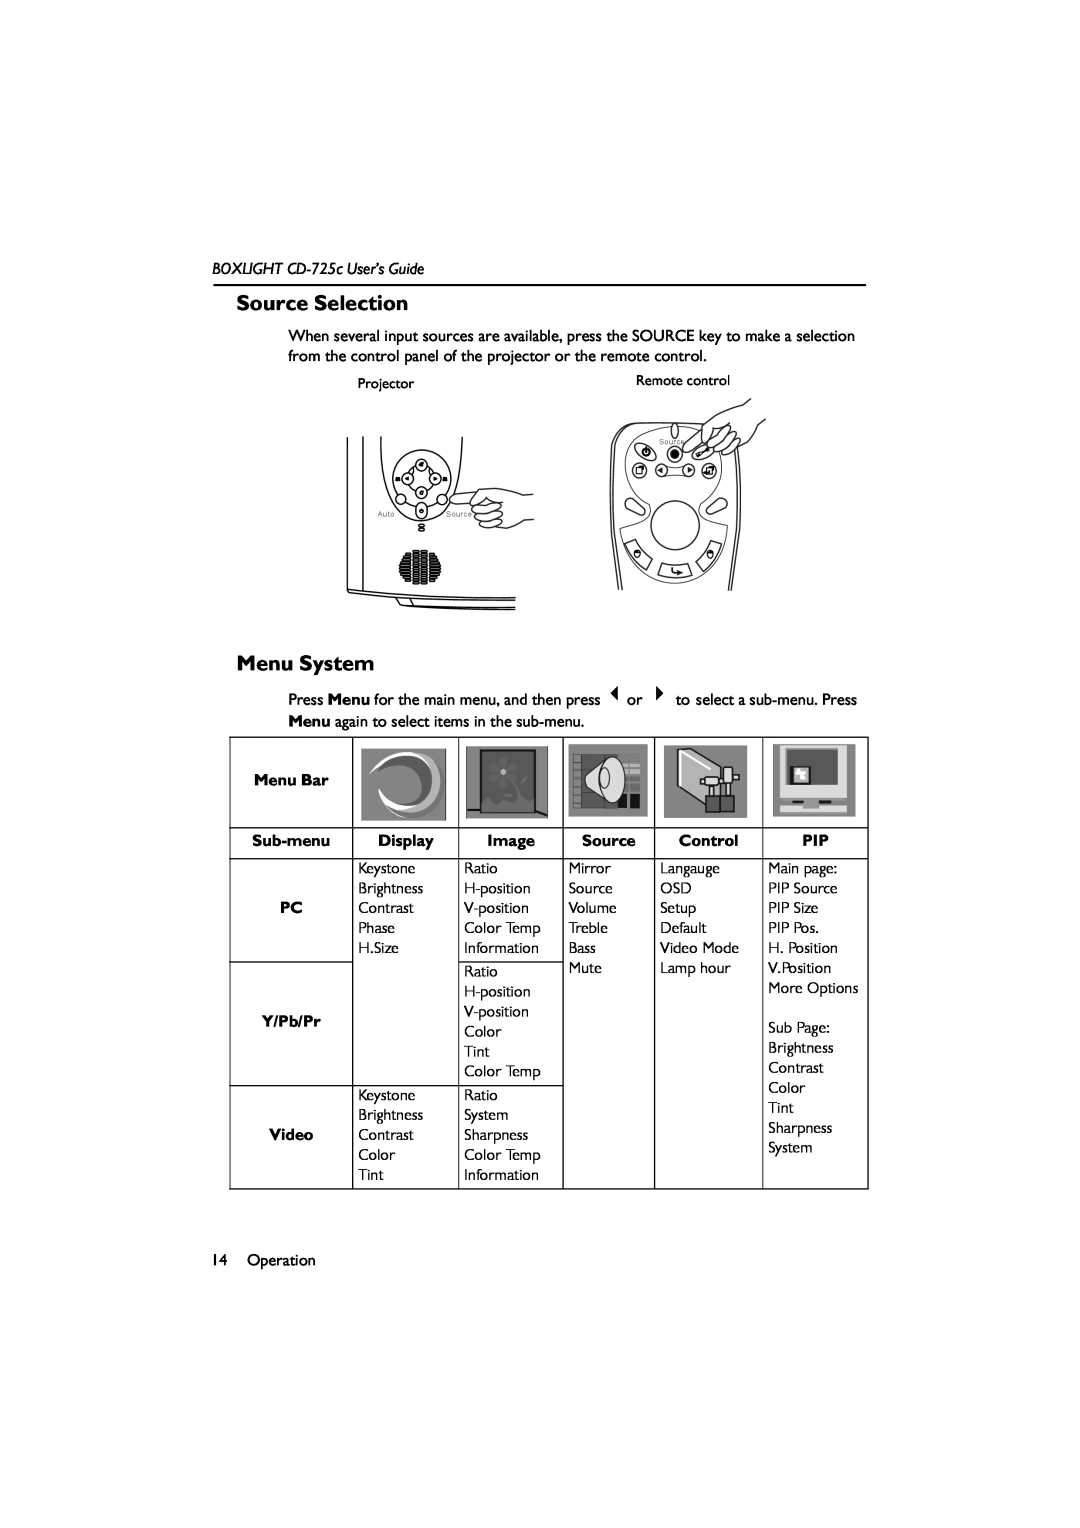 BOXLIGHT manual Source Selection, Menu System, BOXLIGHT CD-725c User’s Guide 